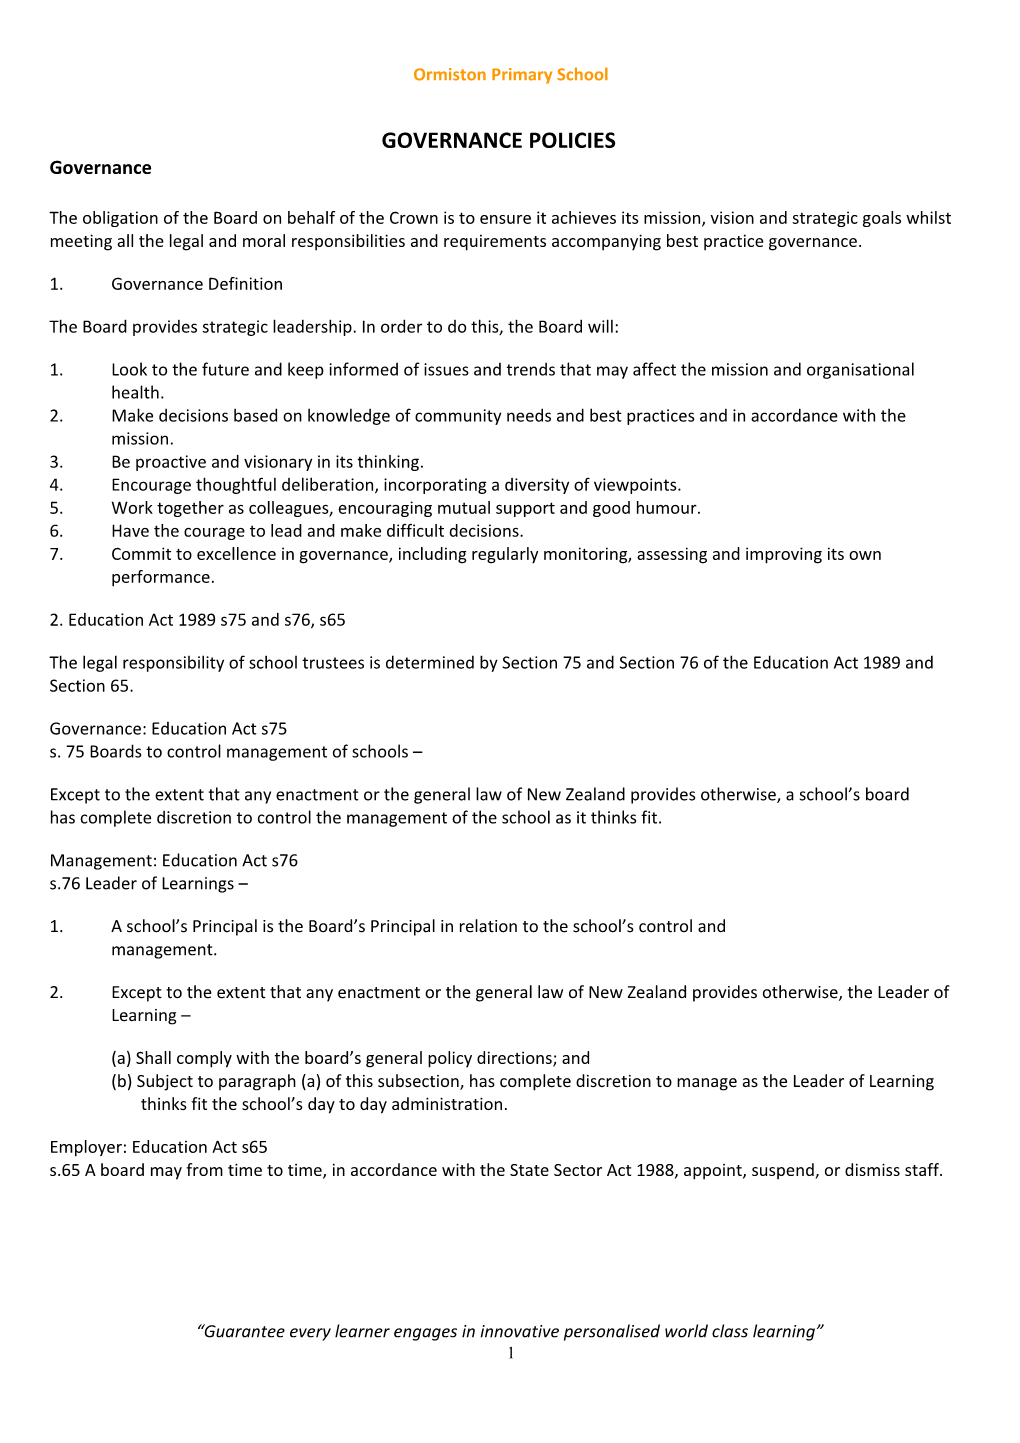 Ormiston Primary School Governance Manual 2014